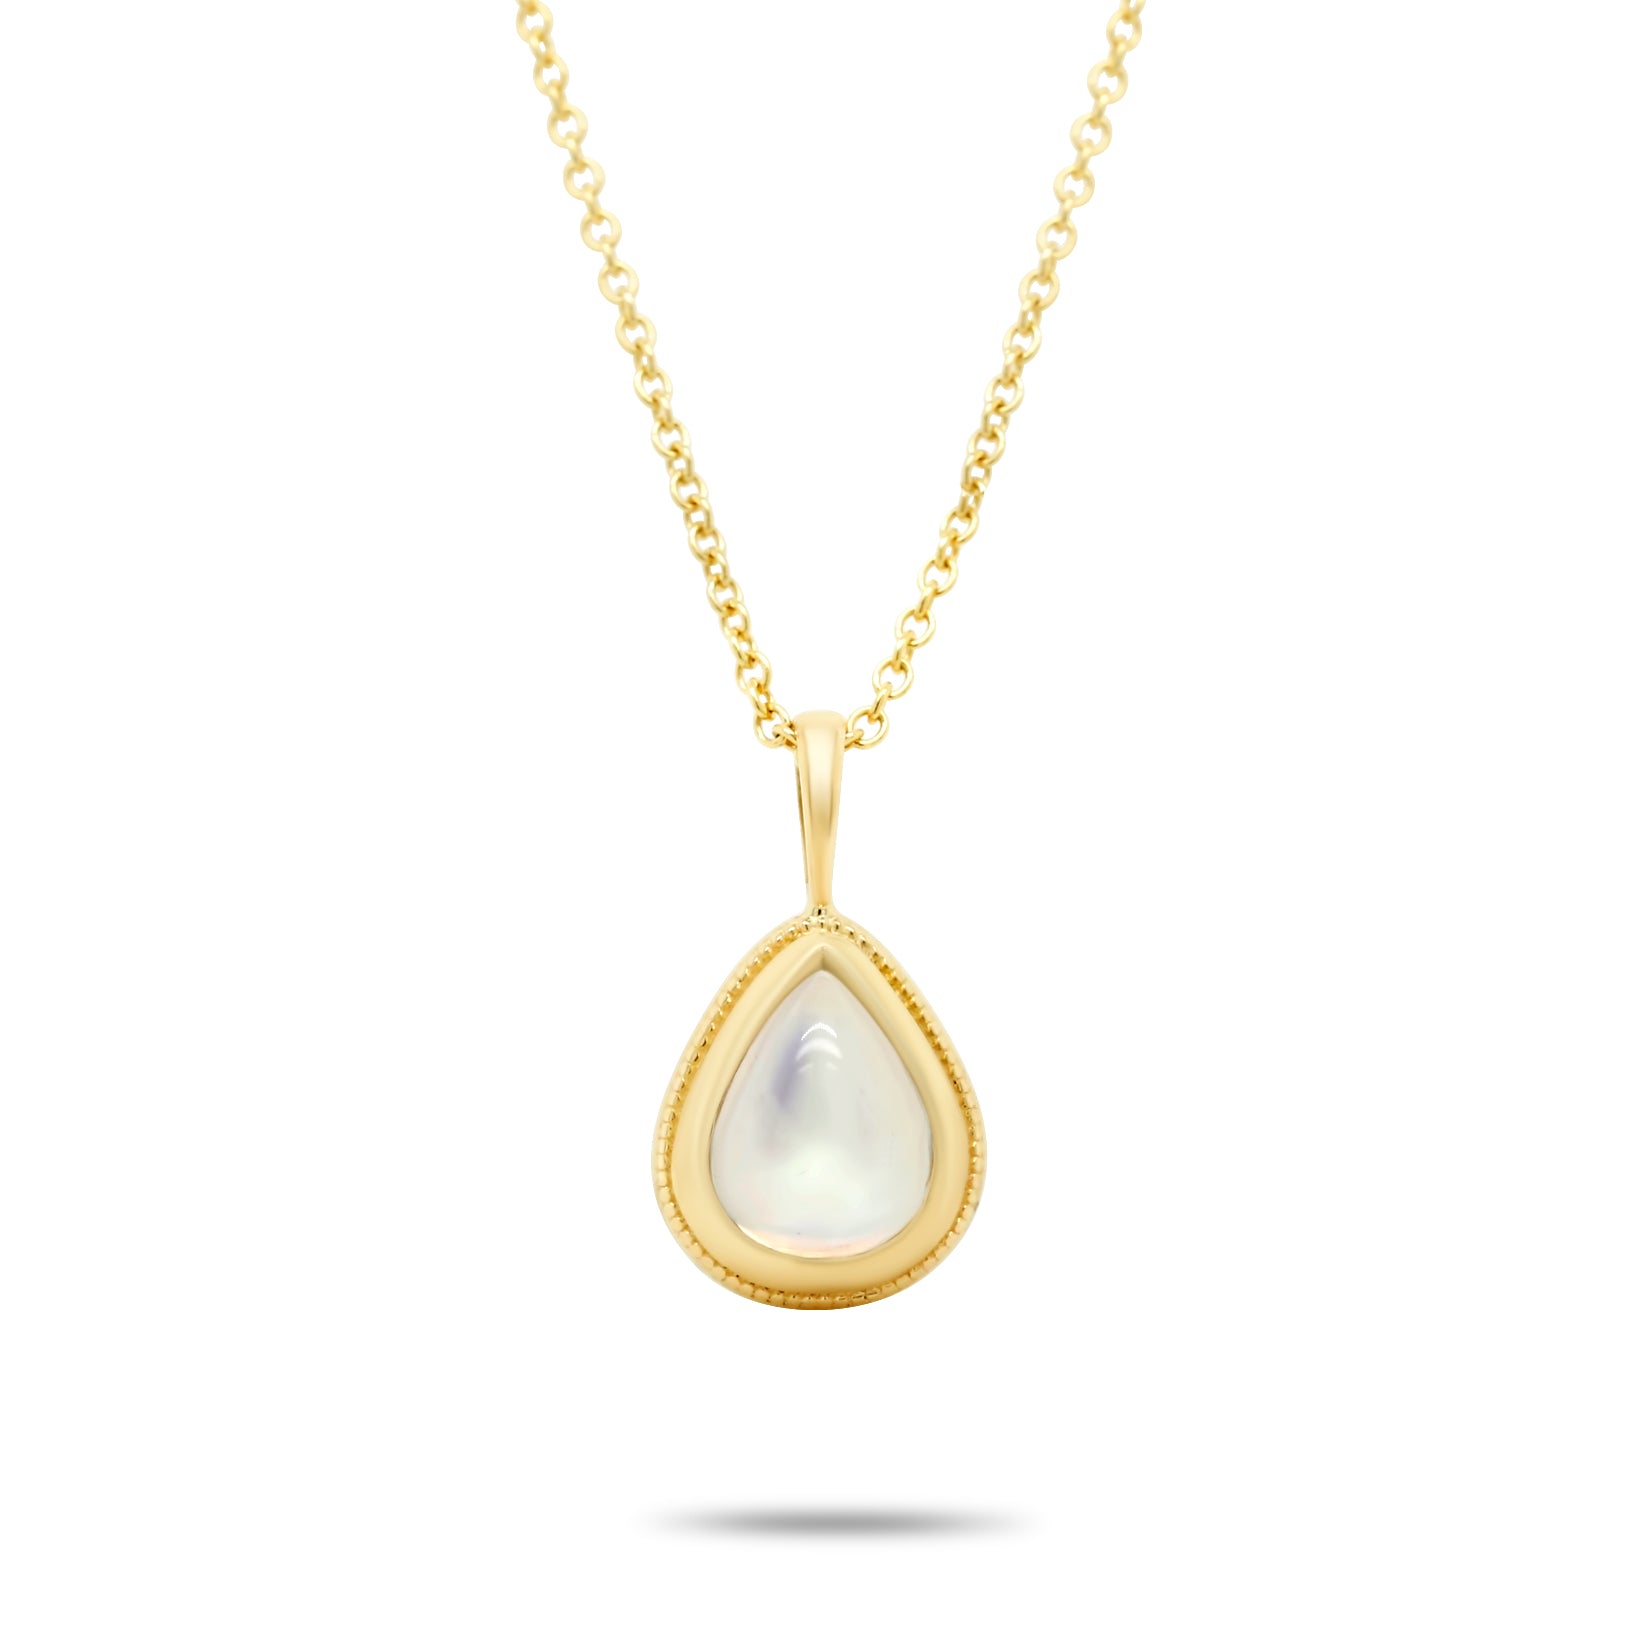 bezel set pear shape moonstone milgrain detailing pendant 14k yellow gold necklace